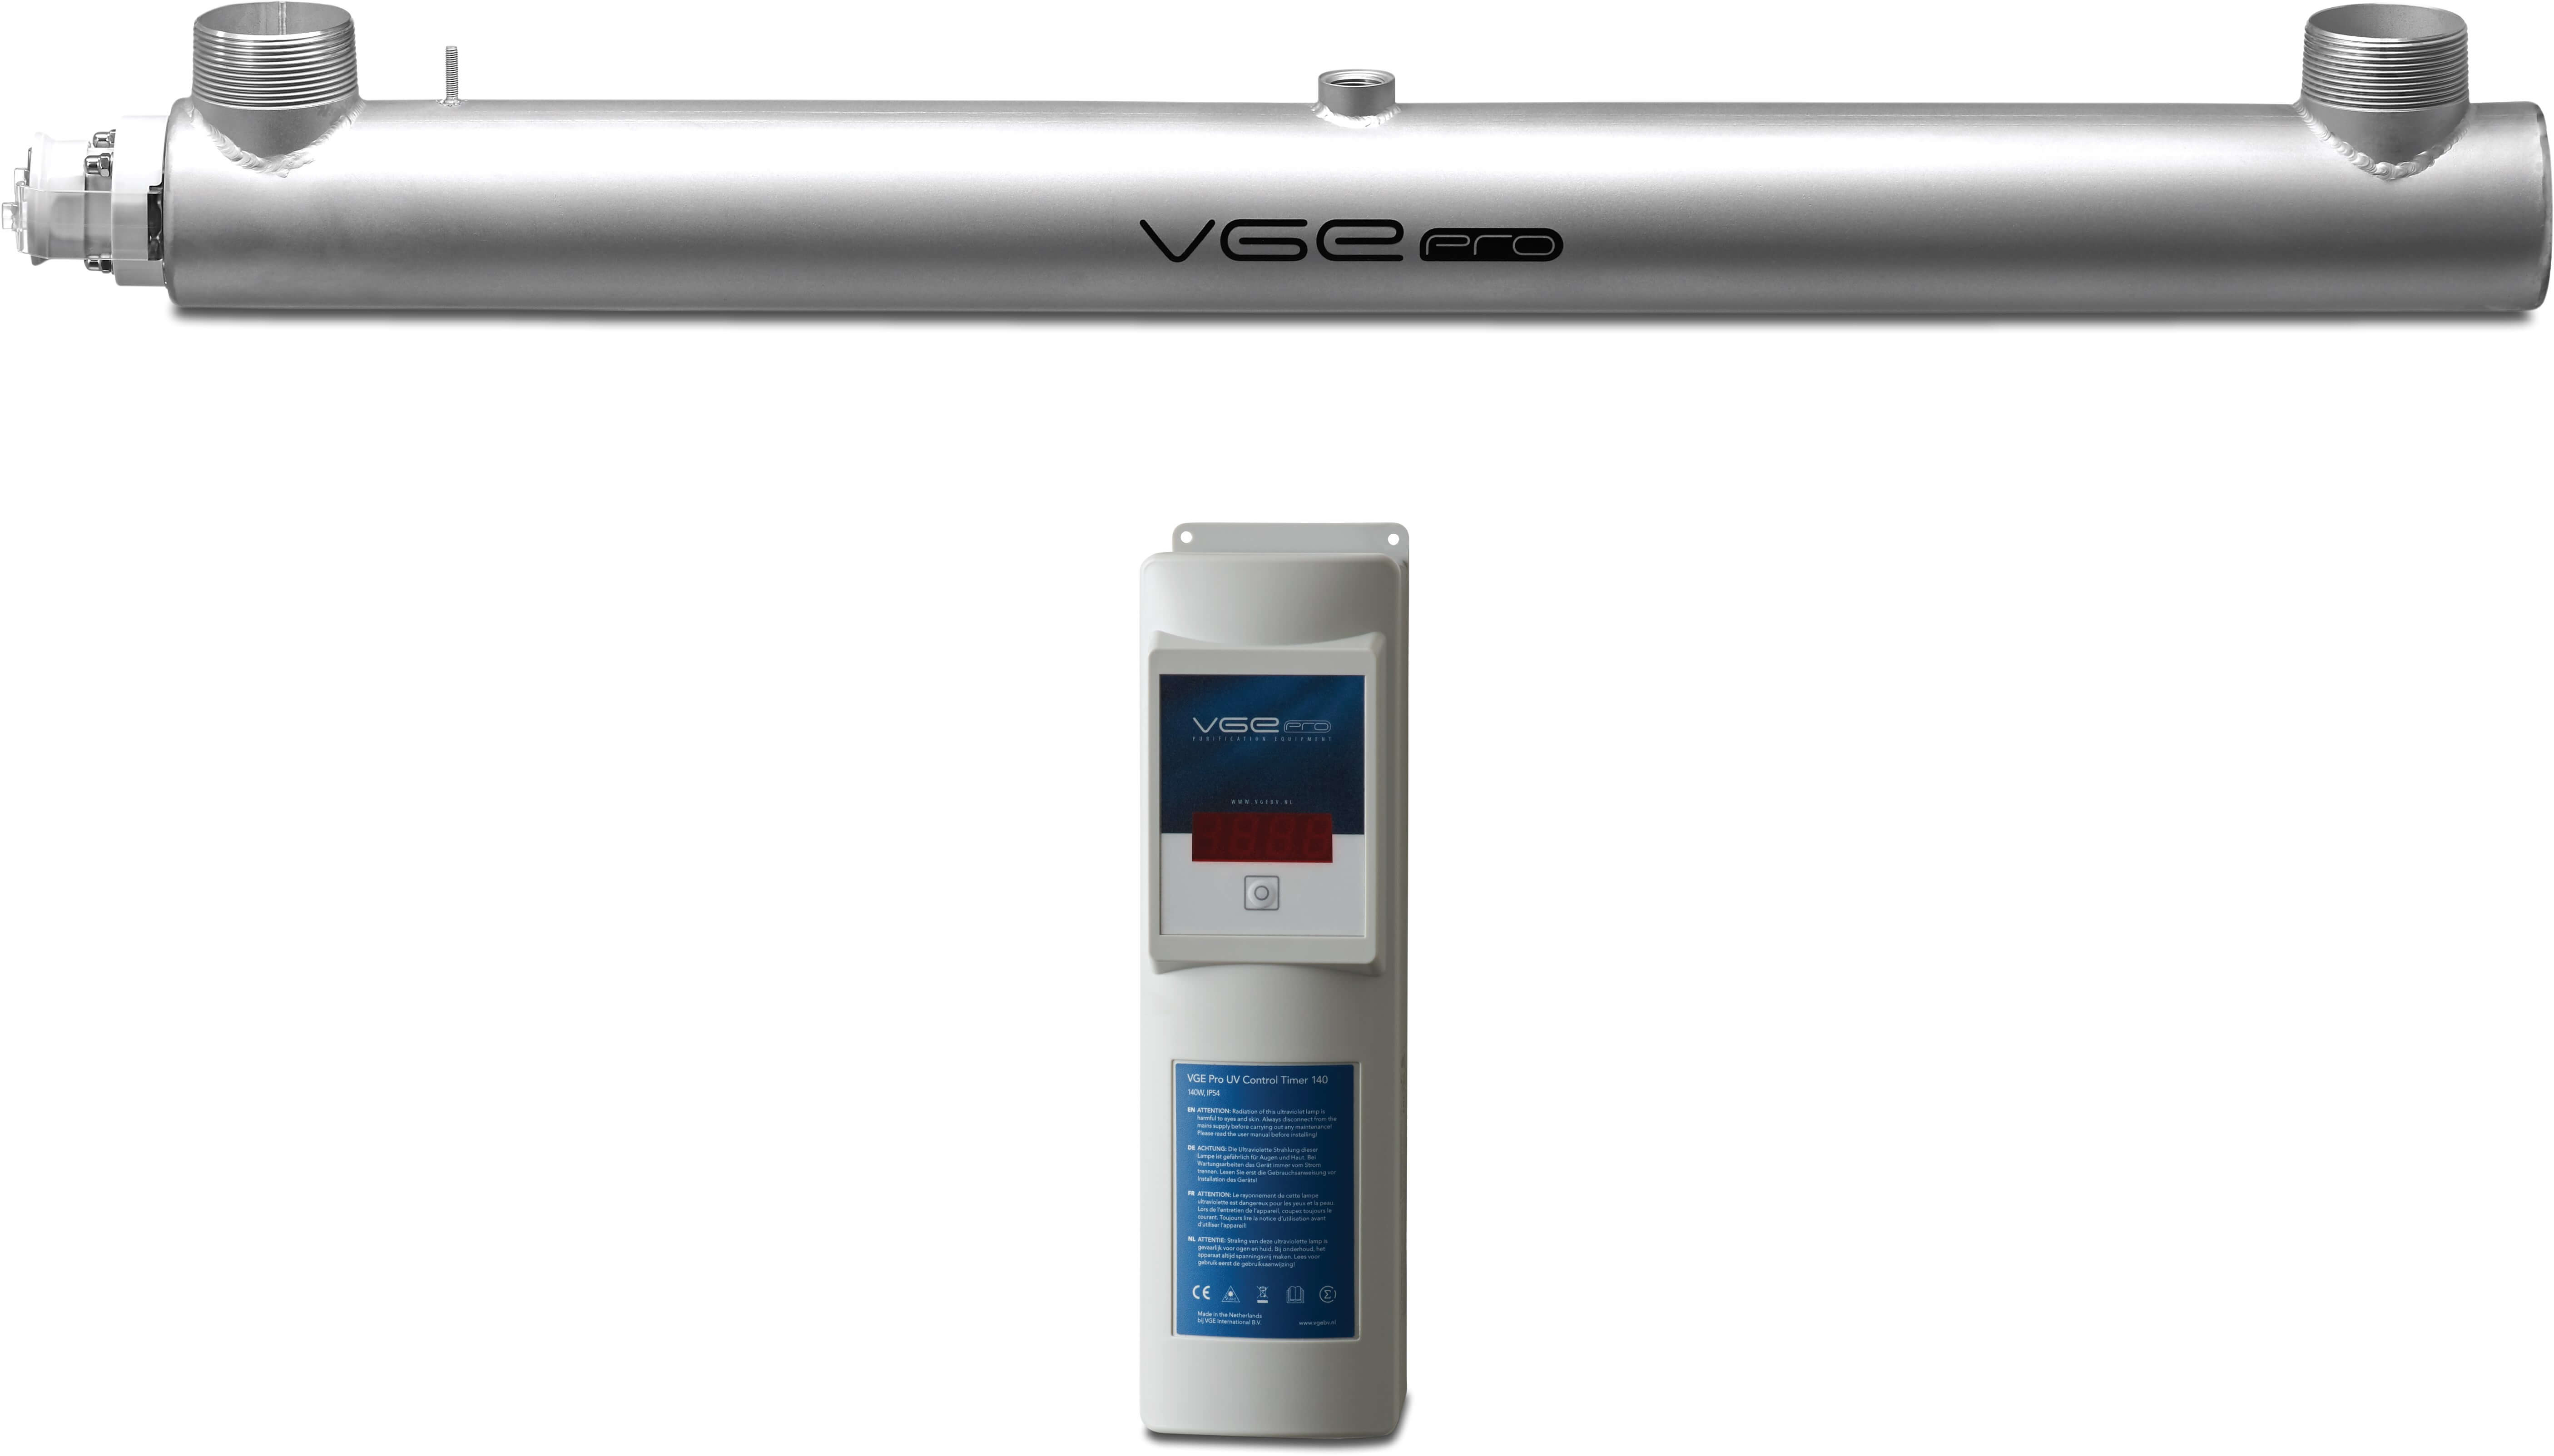 VGE Pro Low UV lampsystem type Control timer 140-76